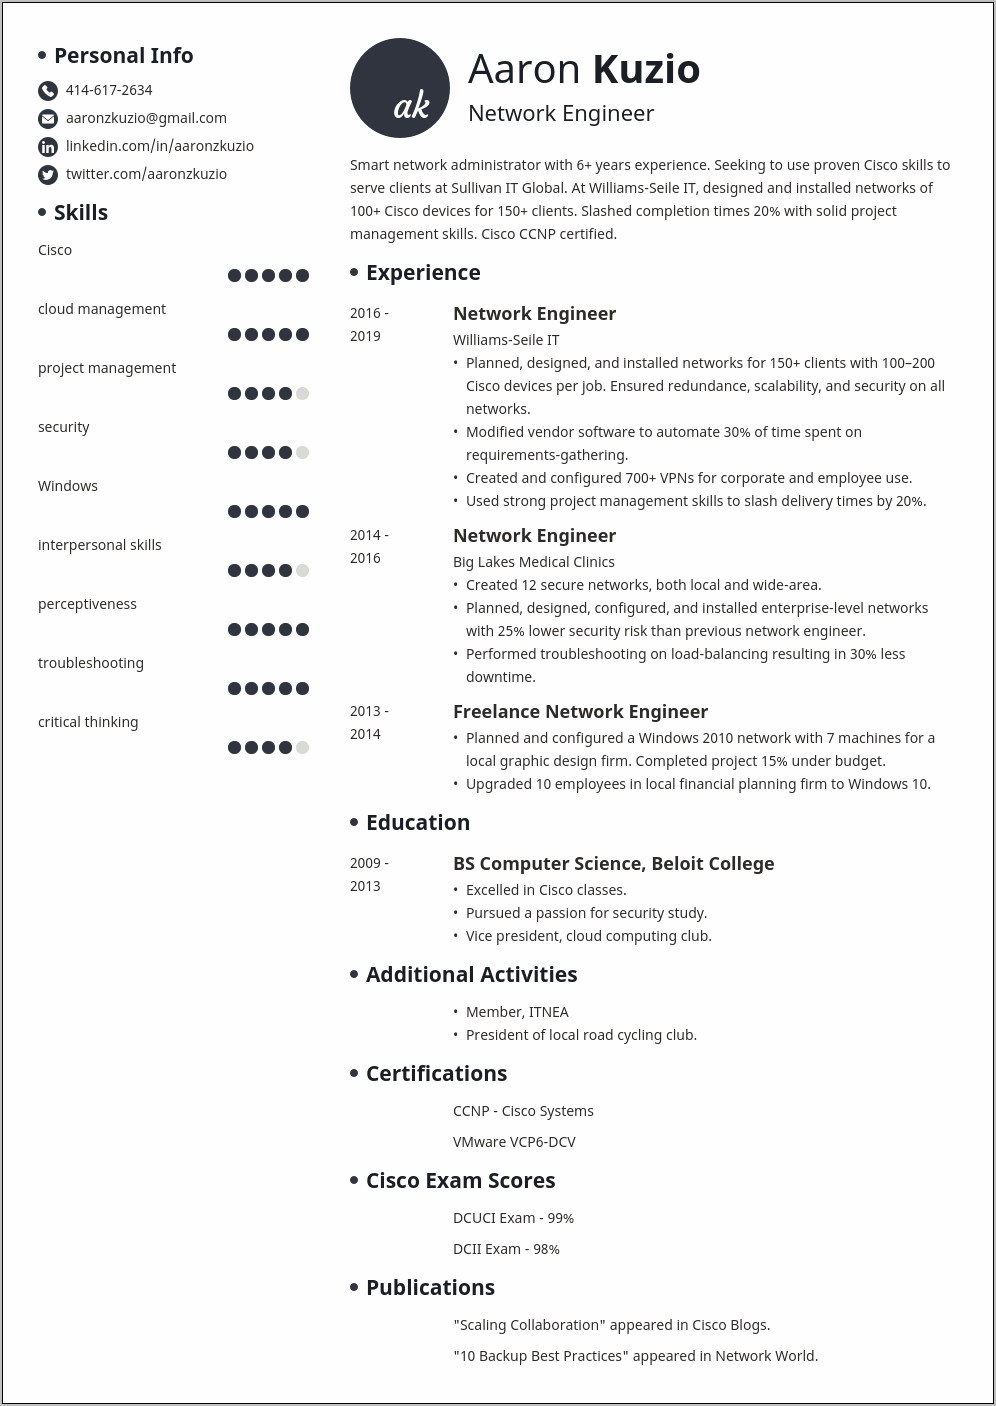 Description Of Cpr Certification For Resume